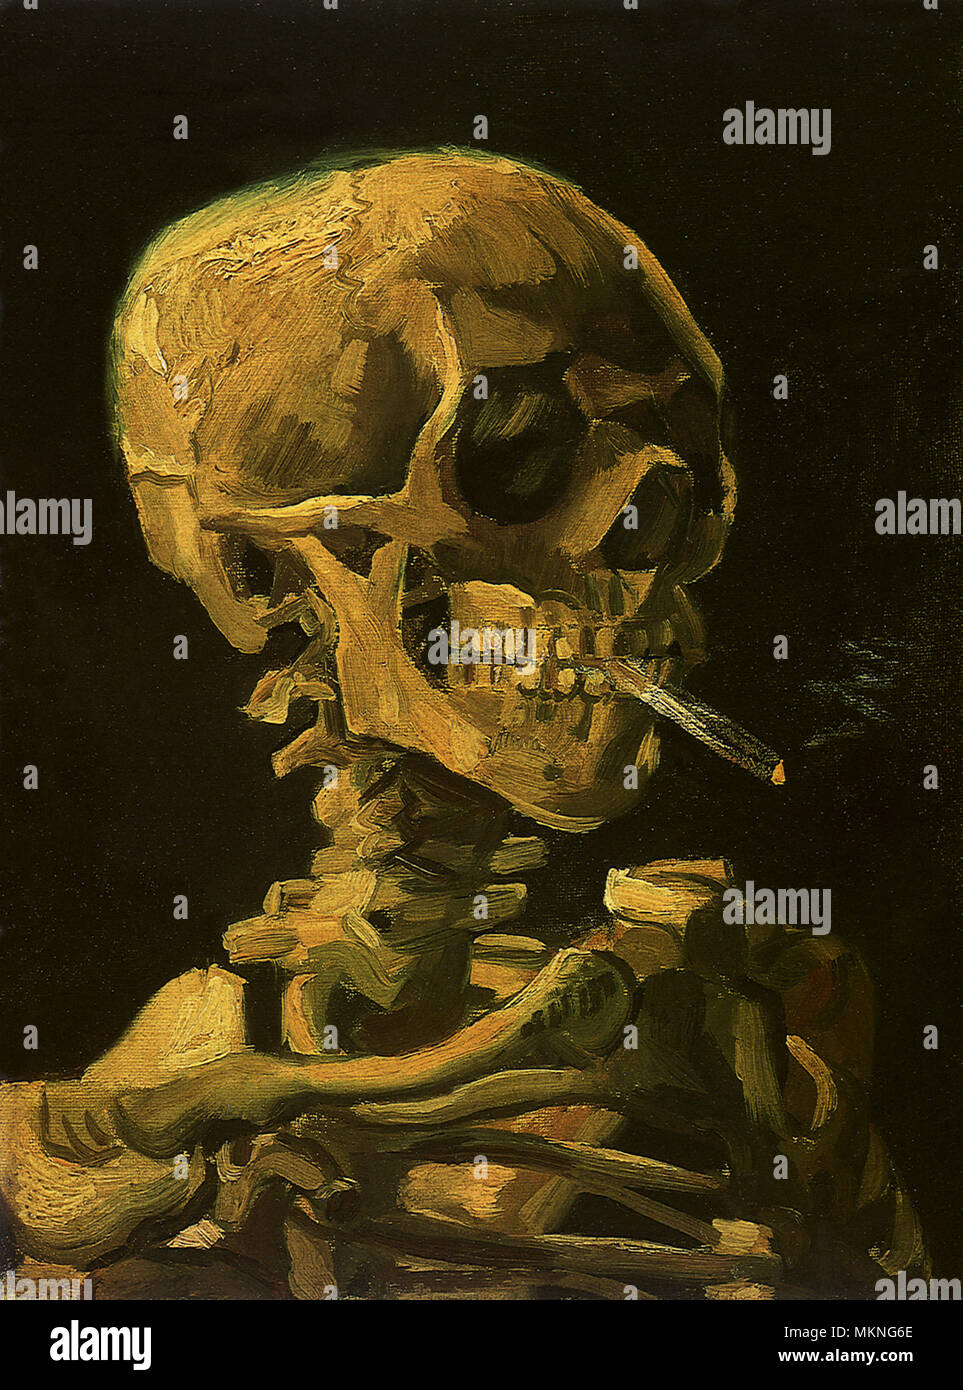 Skull with Cigarette Stock Photo